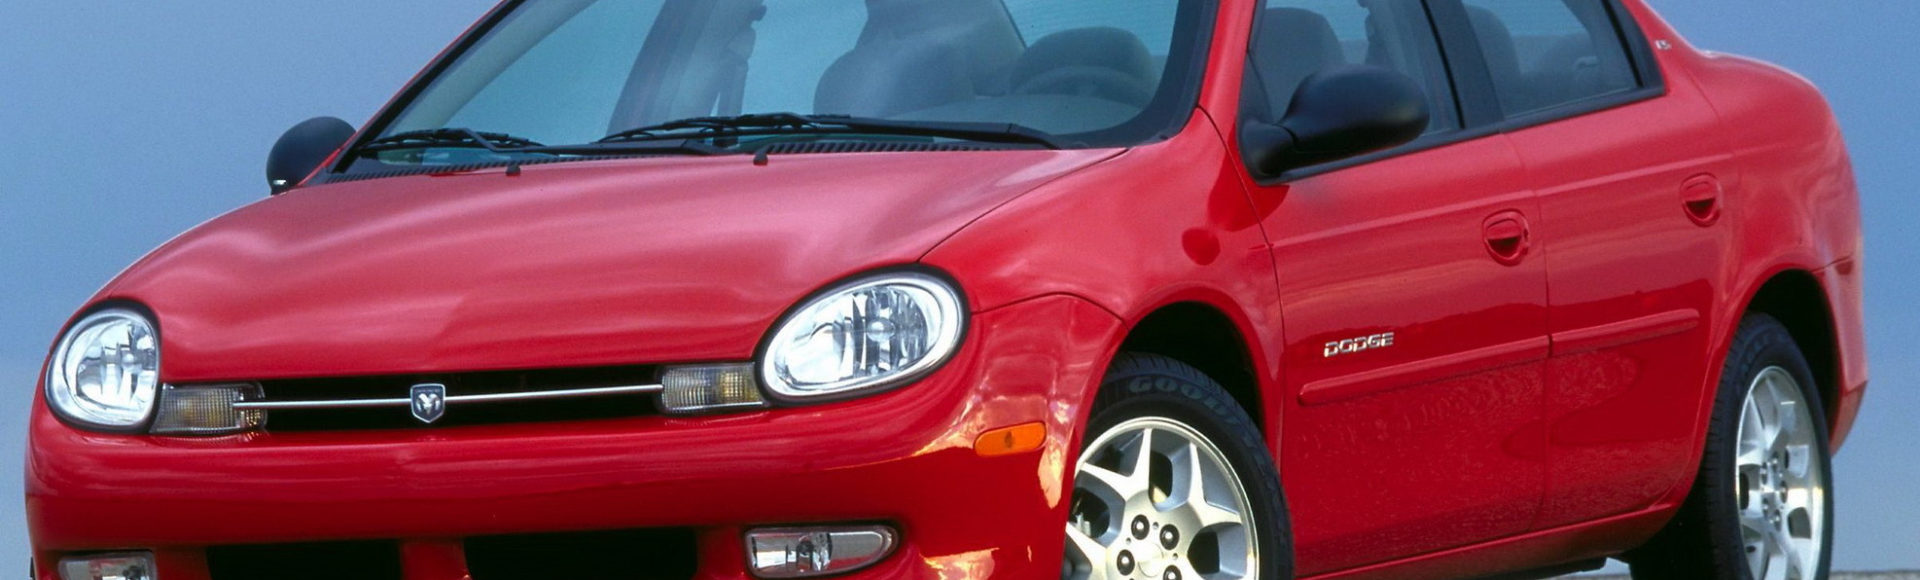 Brève de design : Dodge NEON 1999